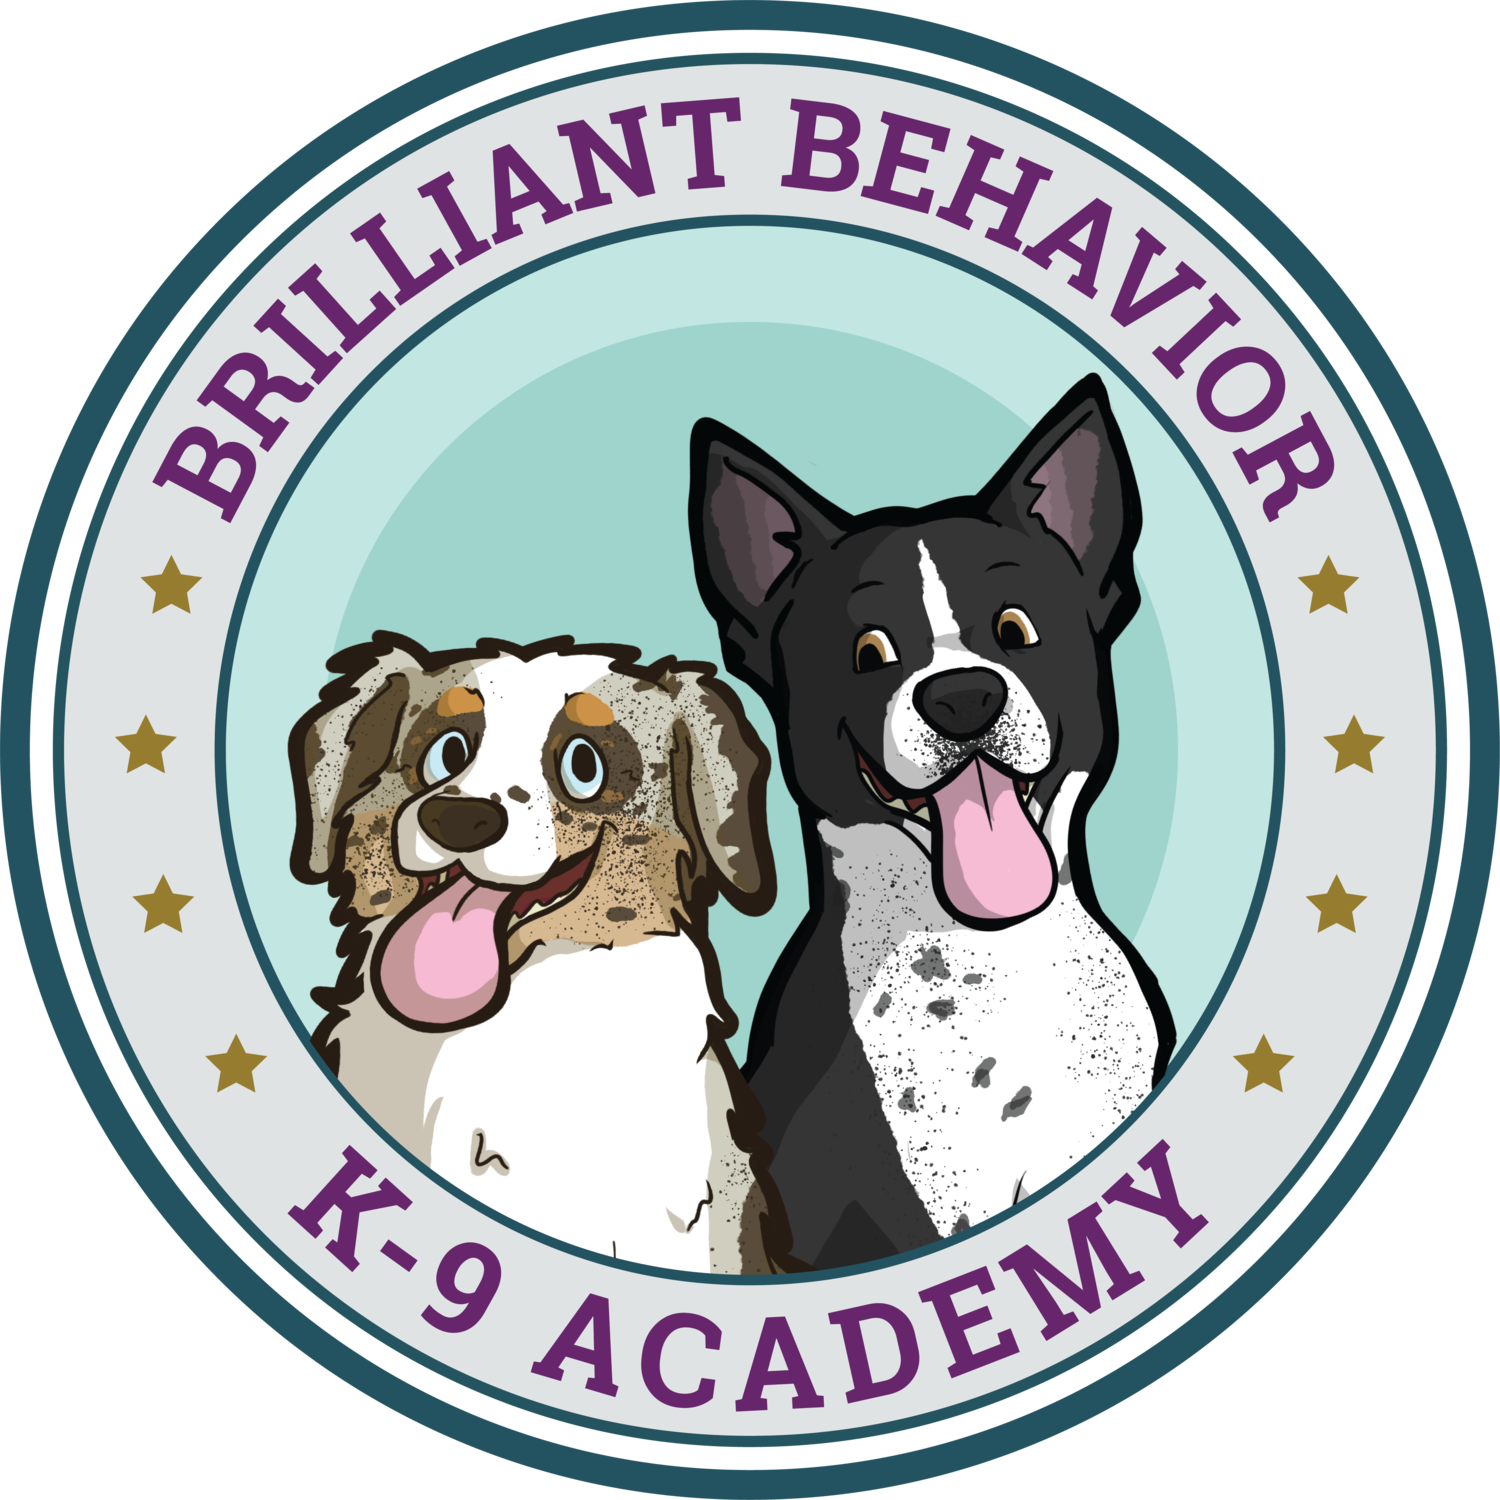 Brilliant Behavior K-9 Academy